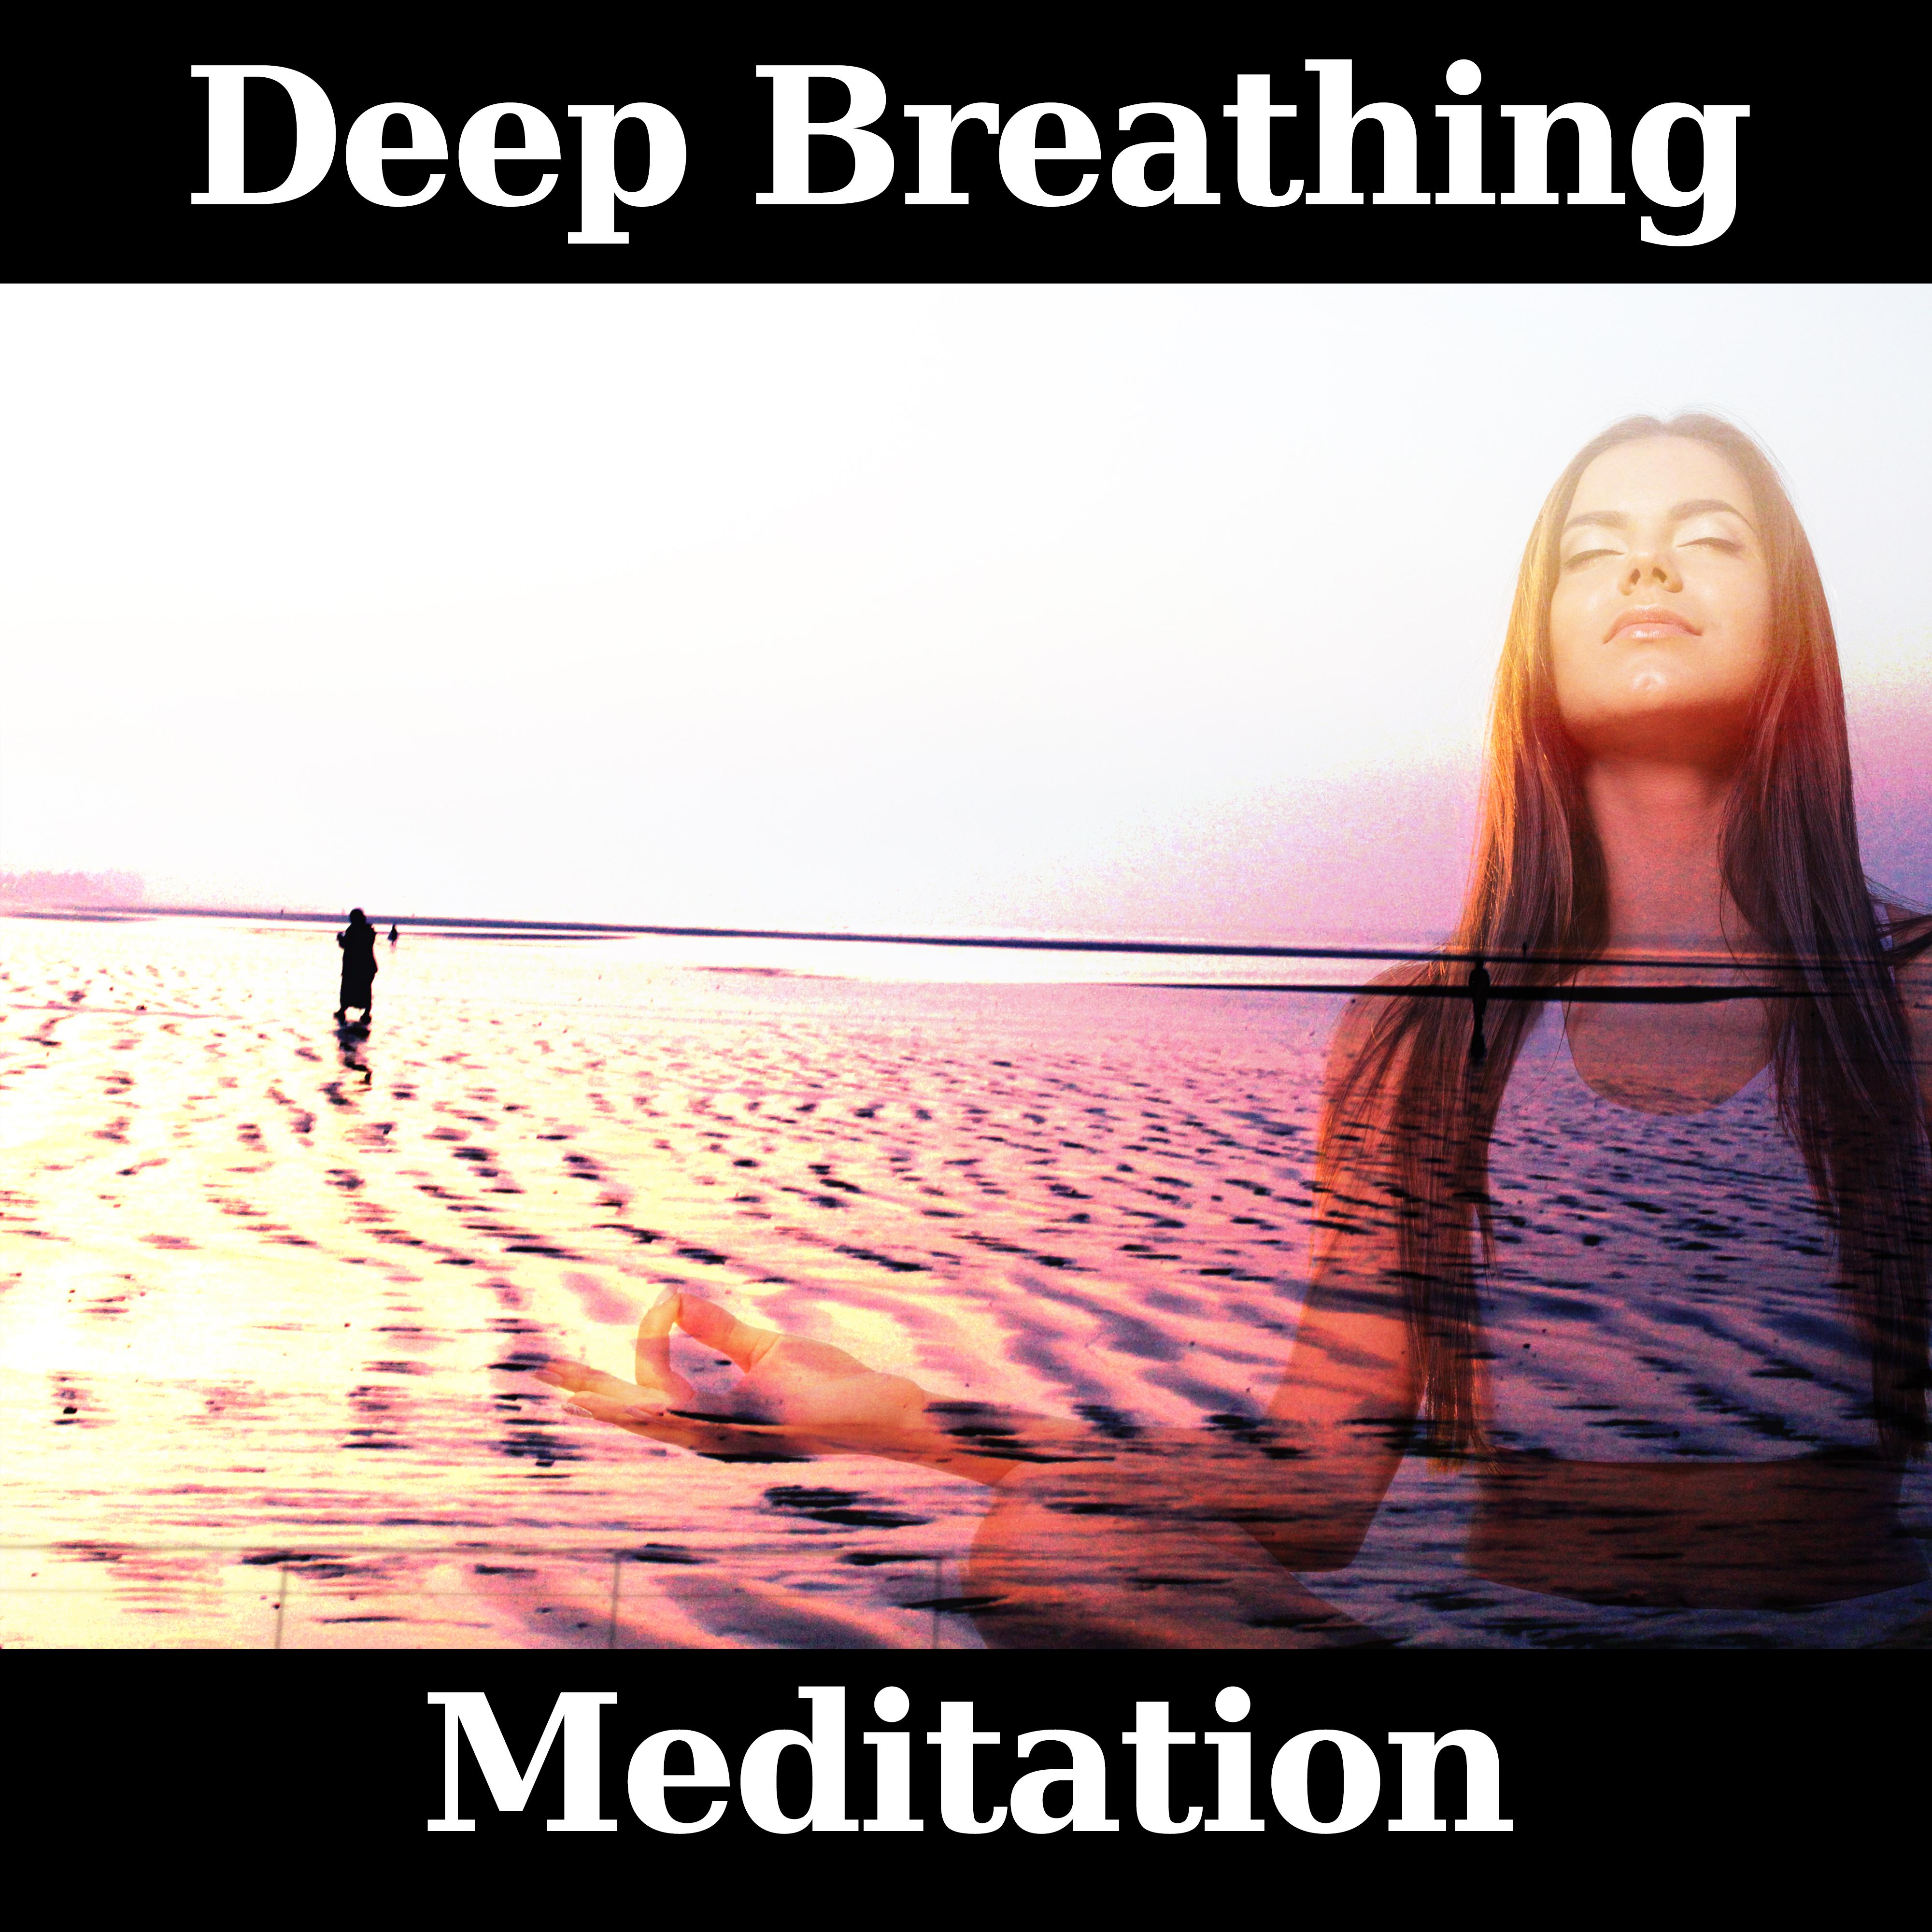 Deep Breathing Meditation – Best Music for Yoga Meditation, Calm Down & Rest, Spirit of Zen, New Age